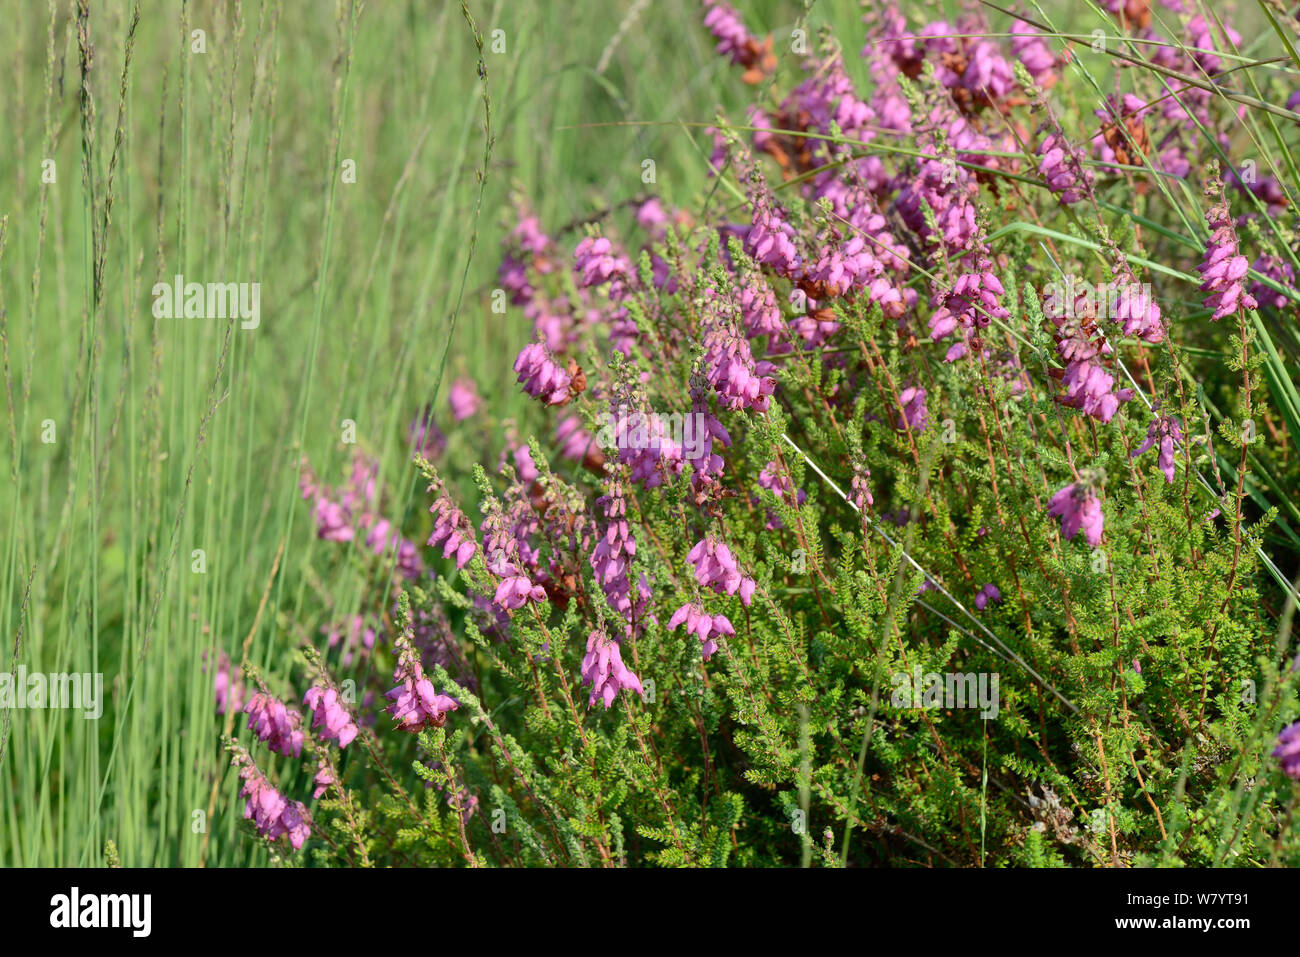 Dorset heath / Ciliate heath (Erica ciliaris) flowering on the fringes of a marsh, Stoborough heath, Dorset, UK, July. Stock Photo